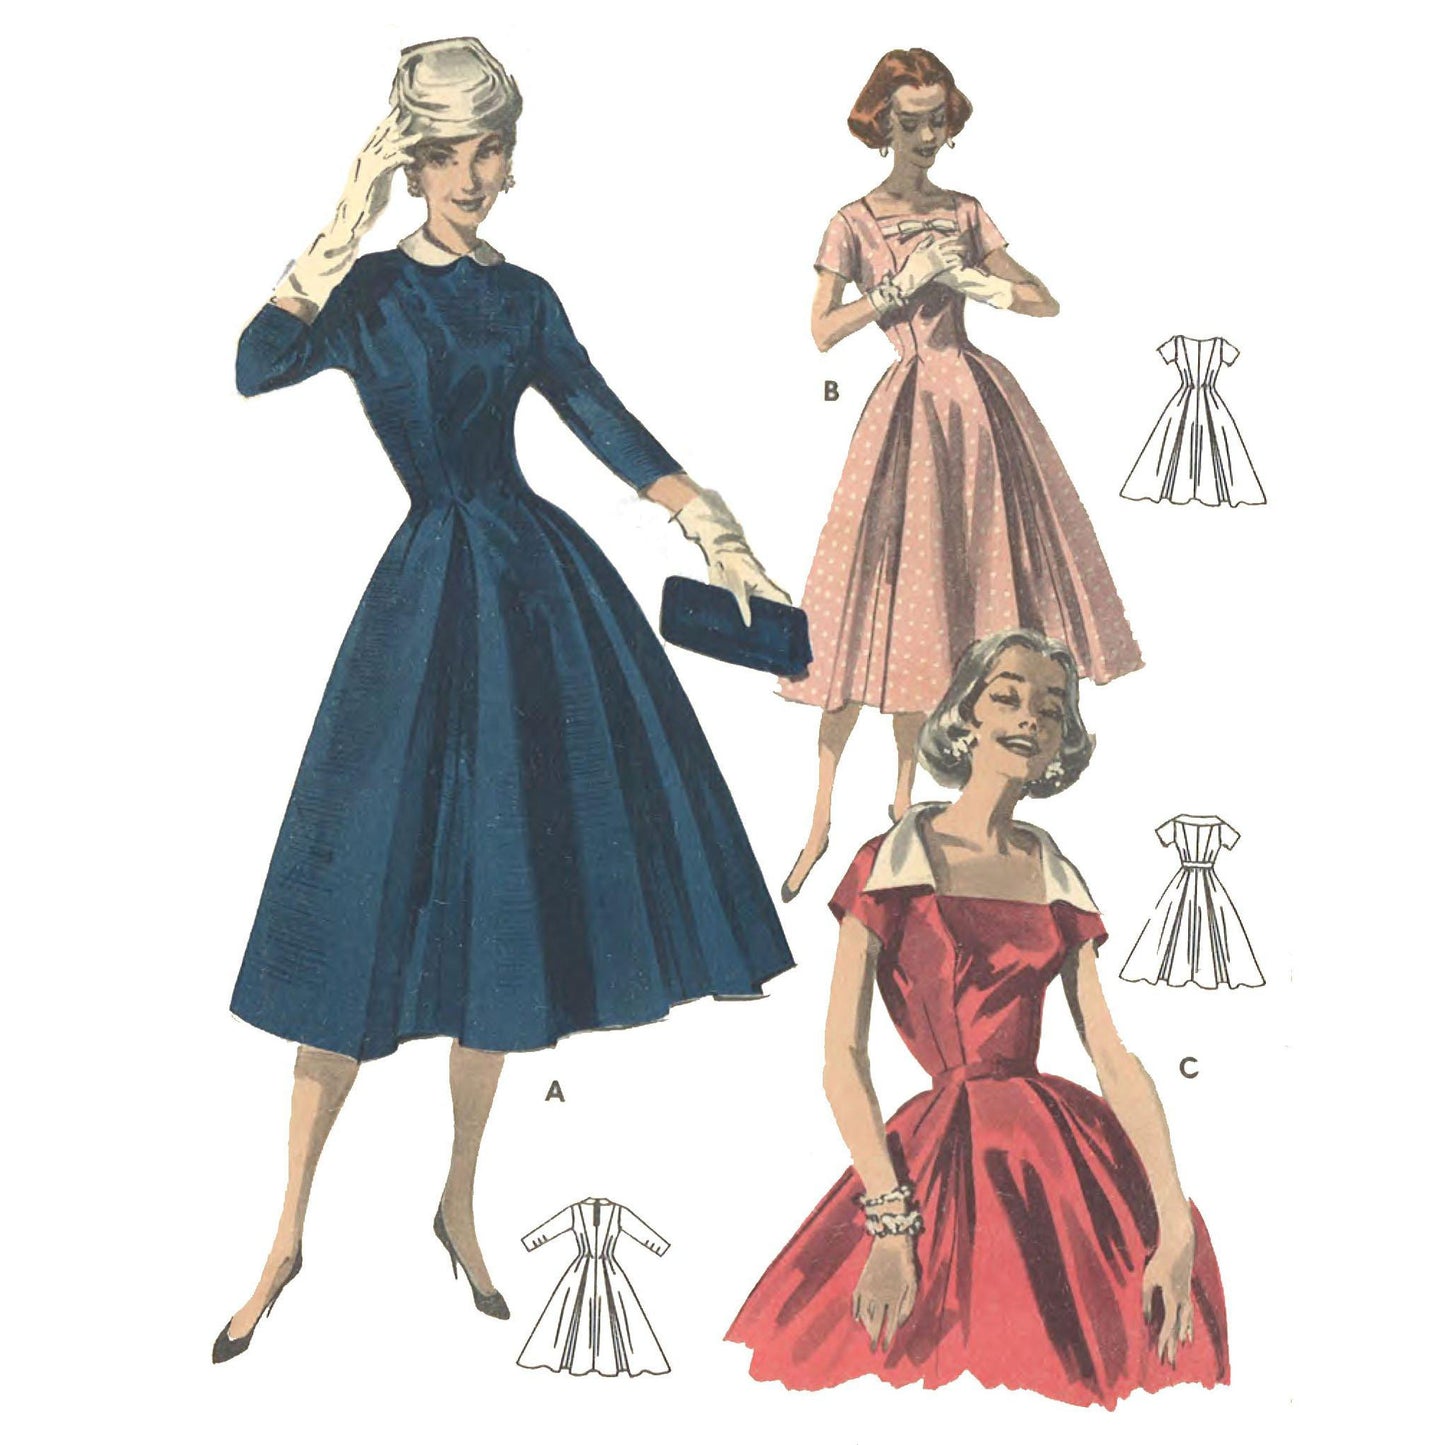 Anne Dress PDF Sewing Pattern Basic Dress, Barbie Dress Pattern